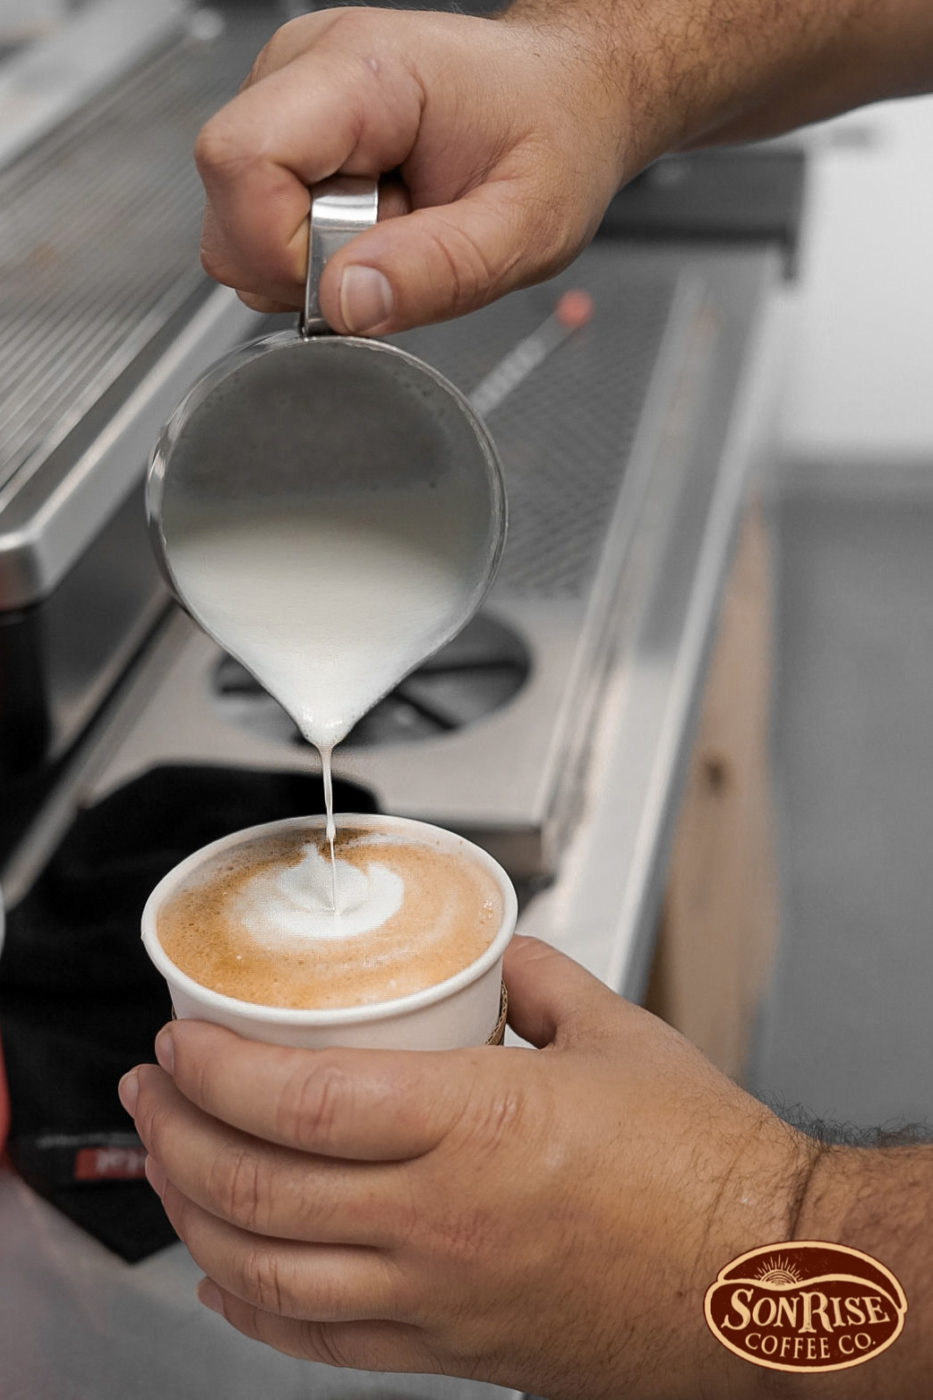 sonrise mobile coffee shop latte